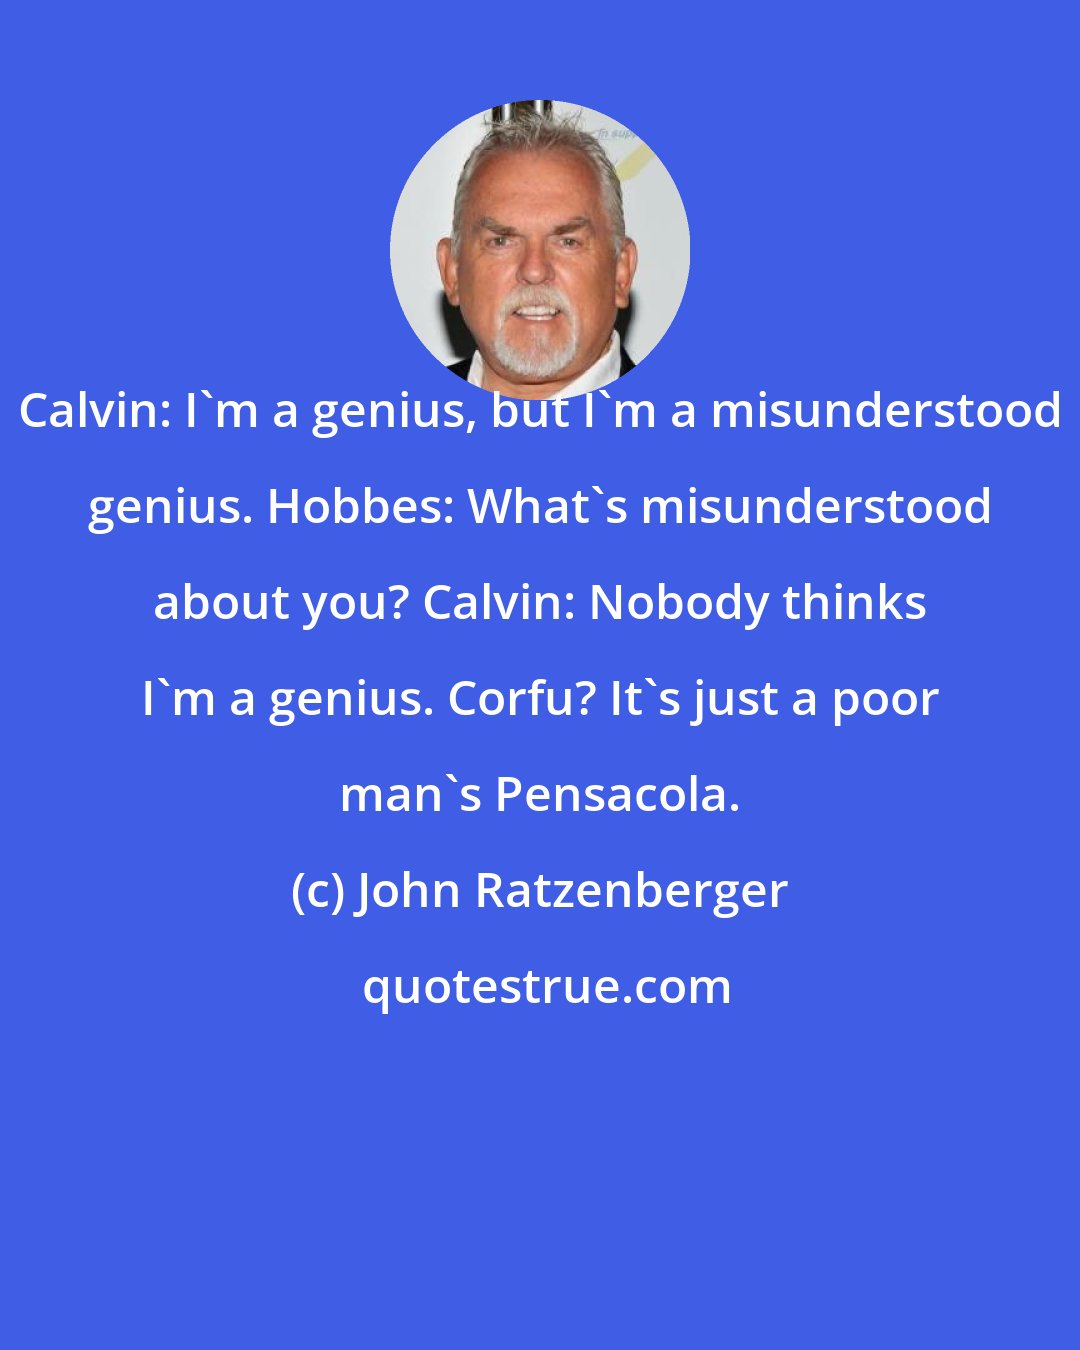 John Ratzenberger: Calvin: I'm a genius, but I'm a misunderstood genius. Hobbes: What's misunderstood about you? Calvin: Nobody thinks I'm a genius. Corfu? It's just a poor man's Pensacola.